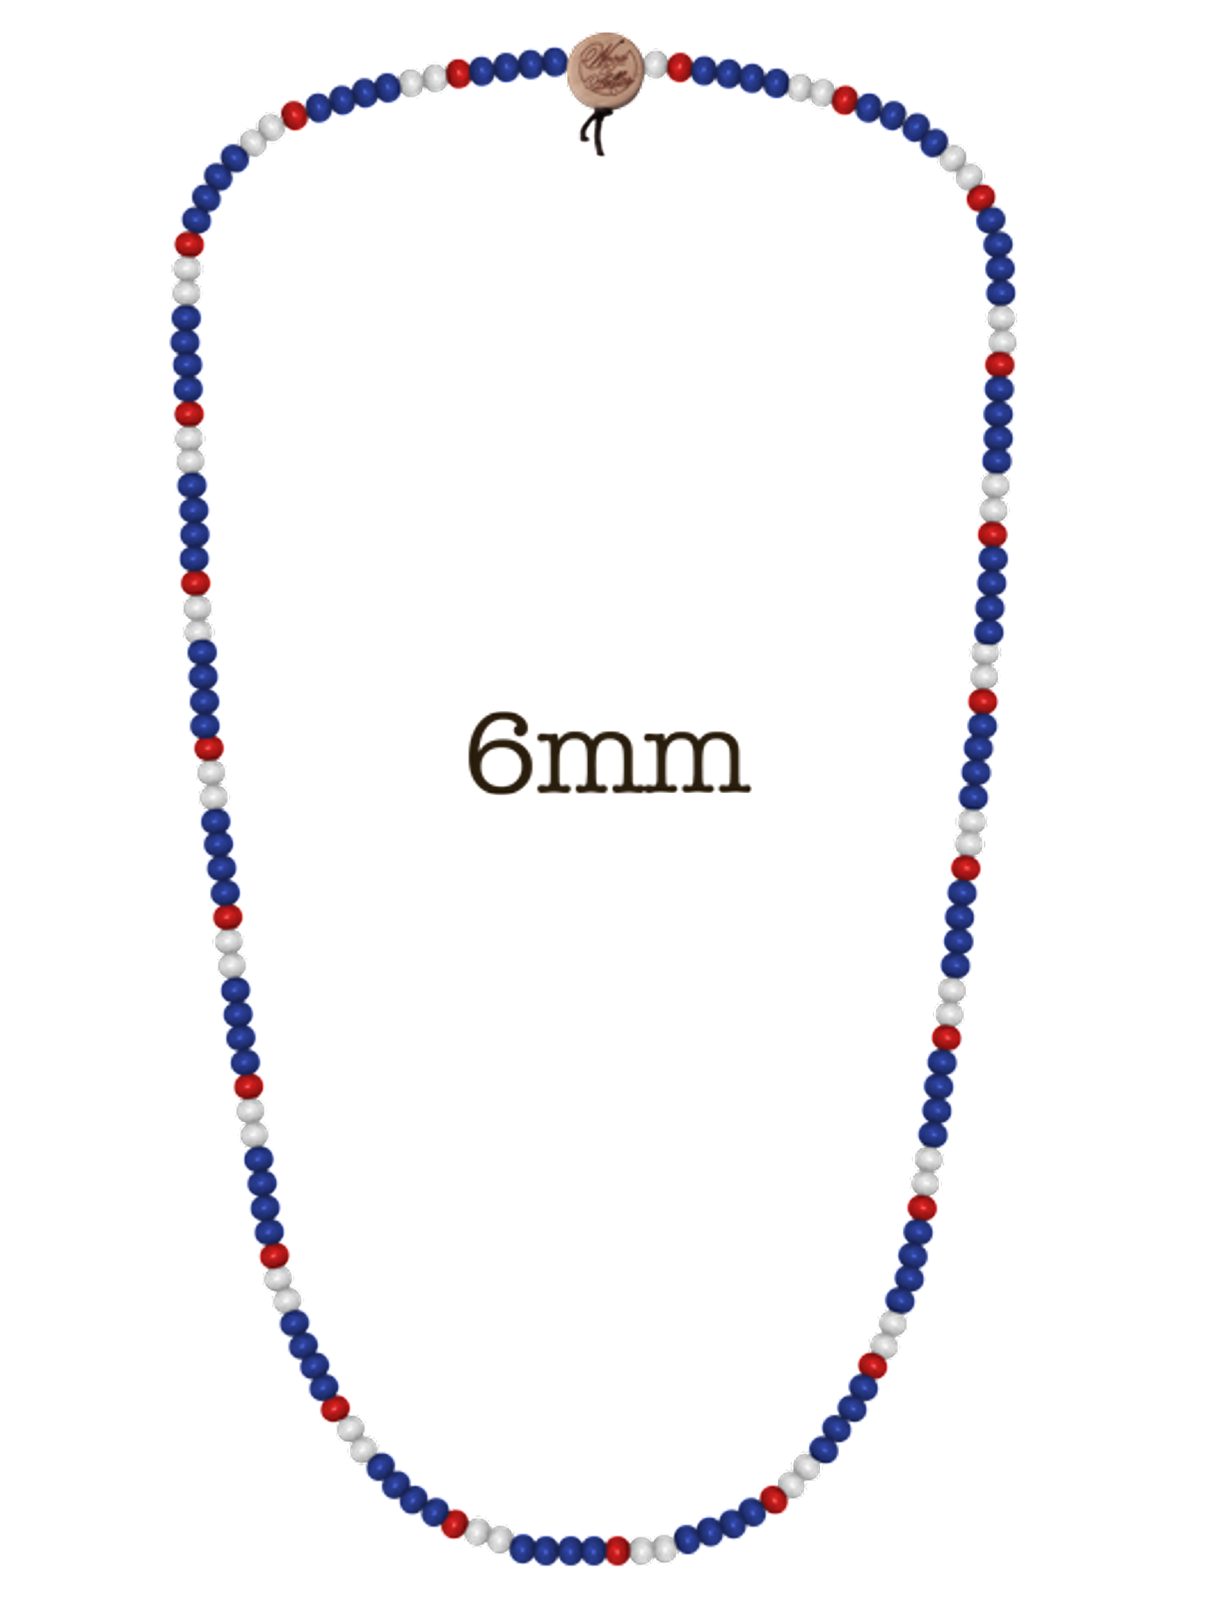 Deluxe Holz-Kette Halsband Pearl Necklace FELLAS WOOD WOOD FELLAS Mode-Schmuck schöne Blau/Rot/Weiß Hals-Schmuck